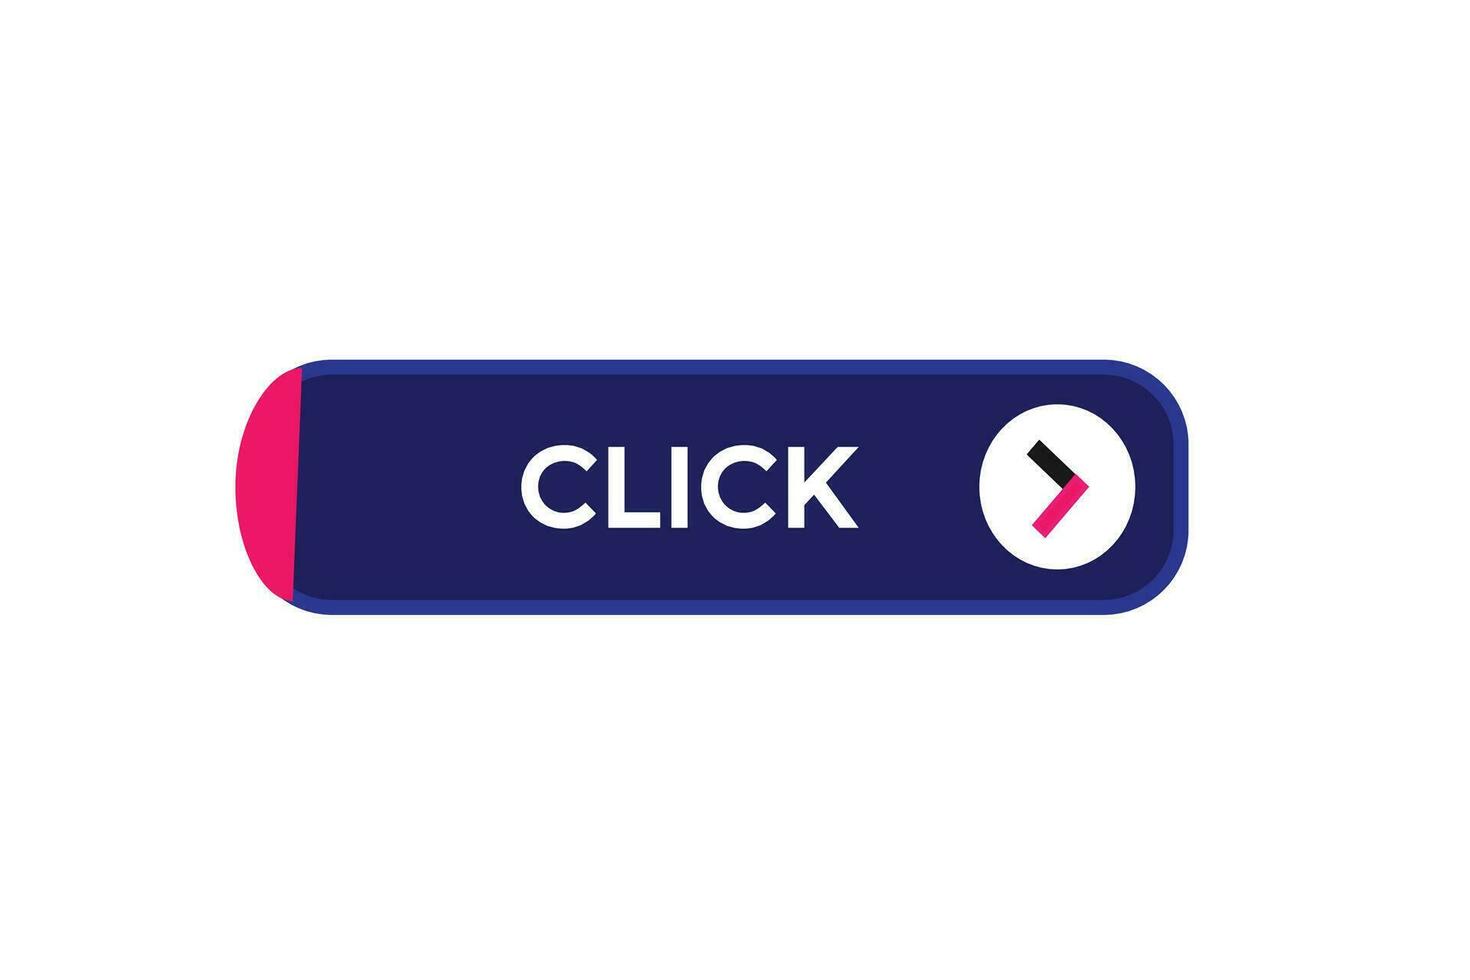 nuevo hacer clic moderno, sitio web, hacer clic botón, nivel, firmar, discurso, burbuja bandera, vector